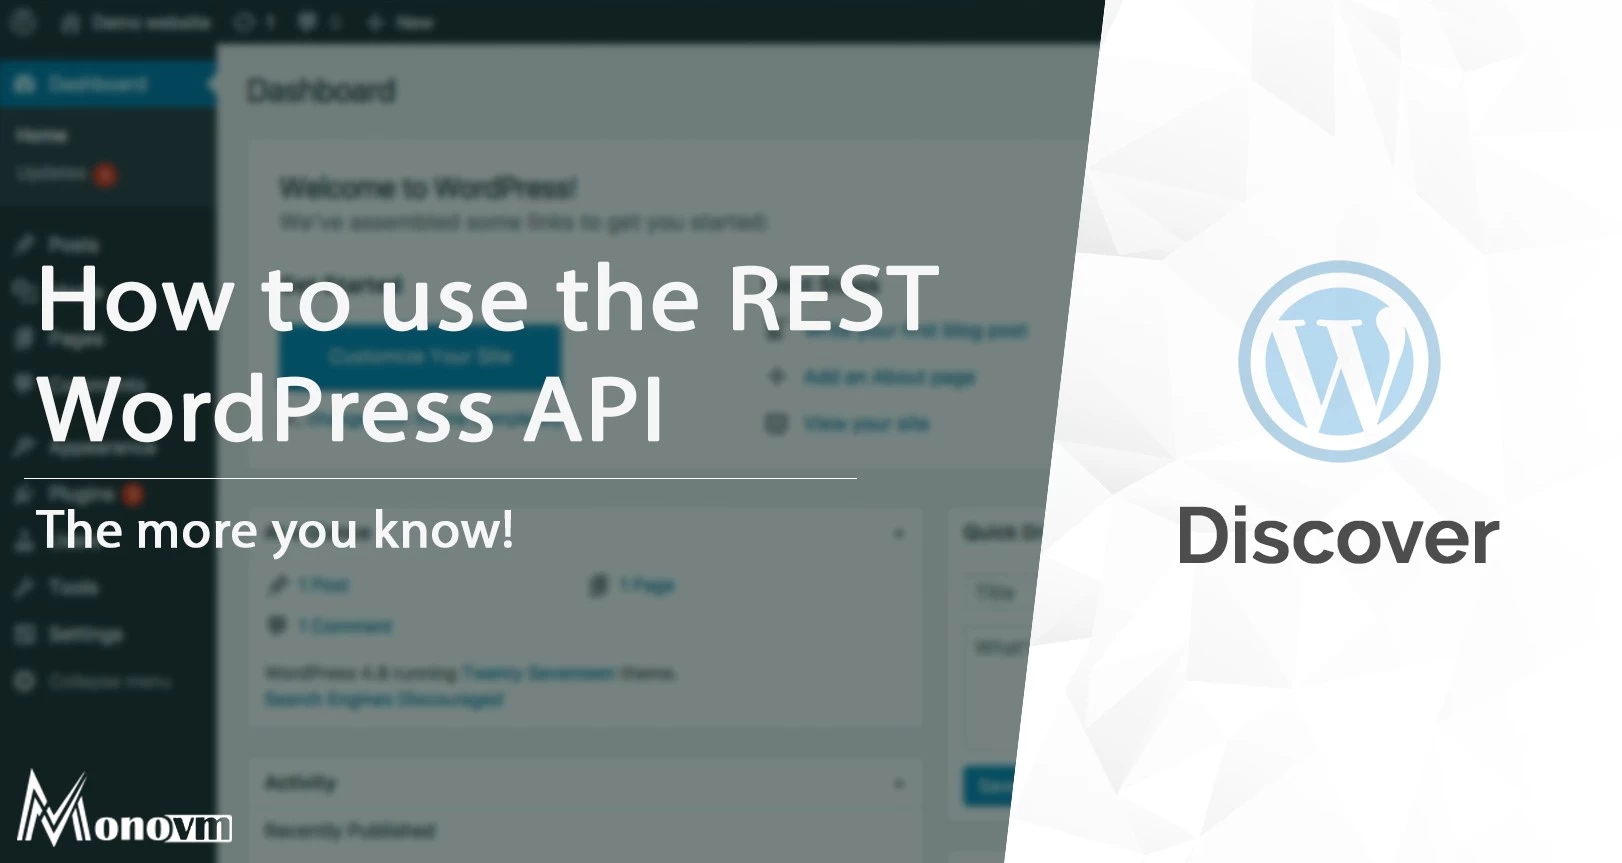 How to use REST WordPress API